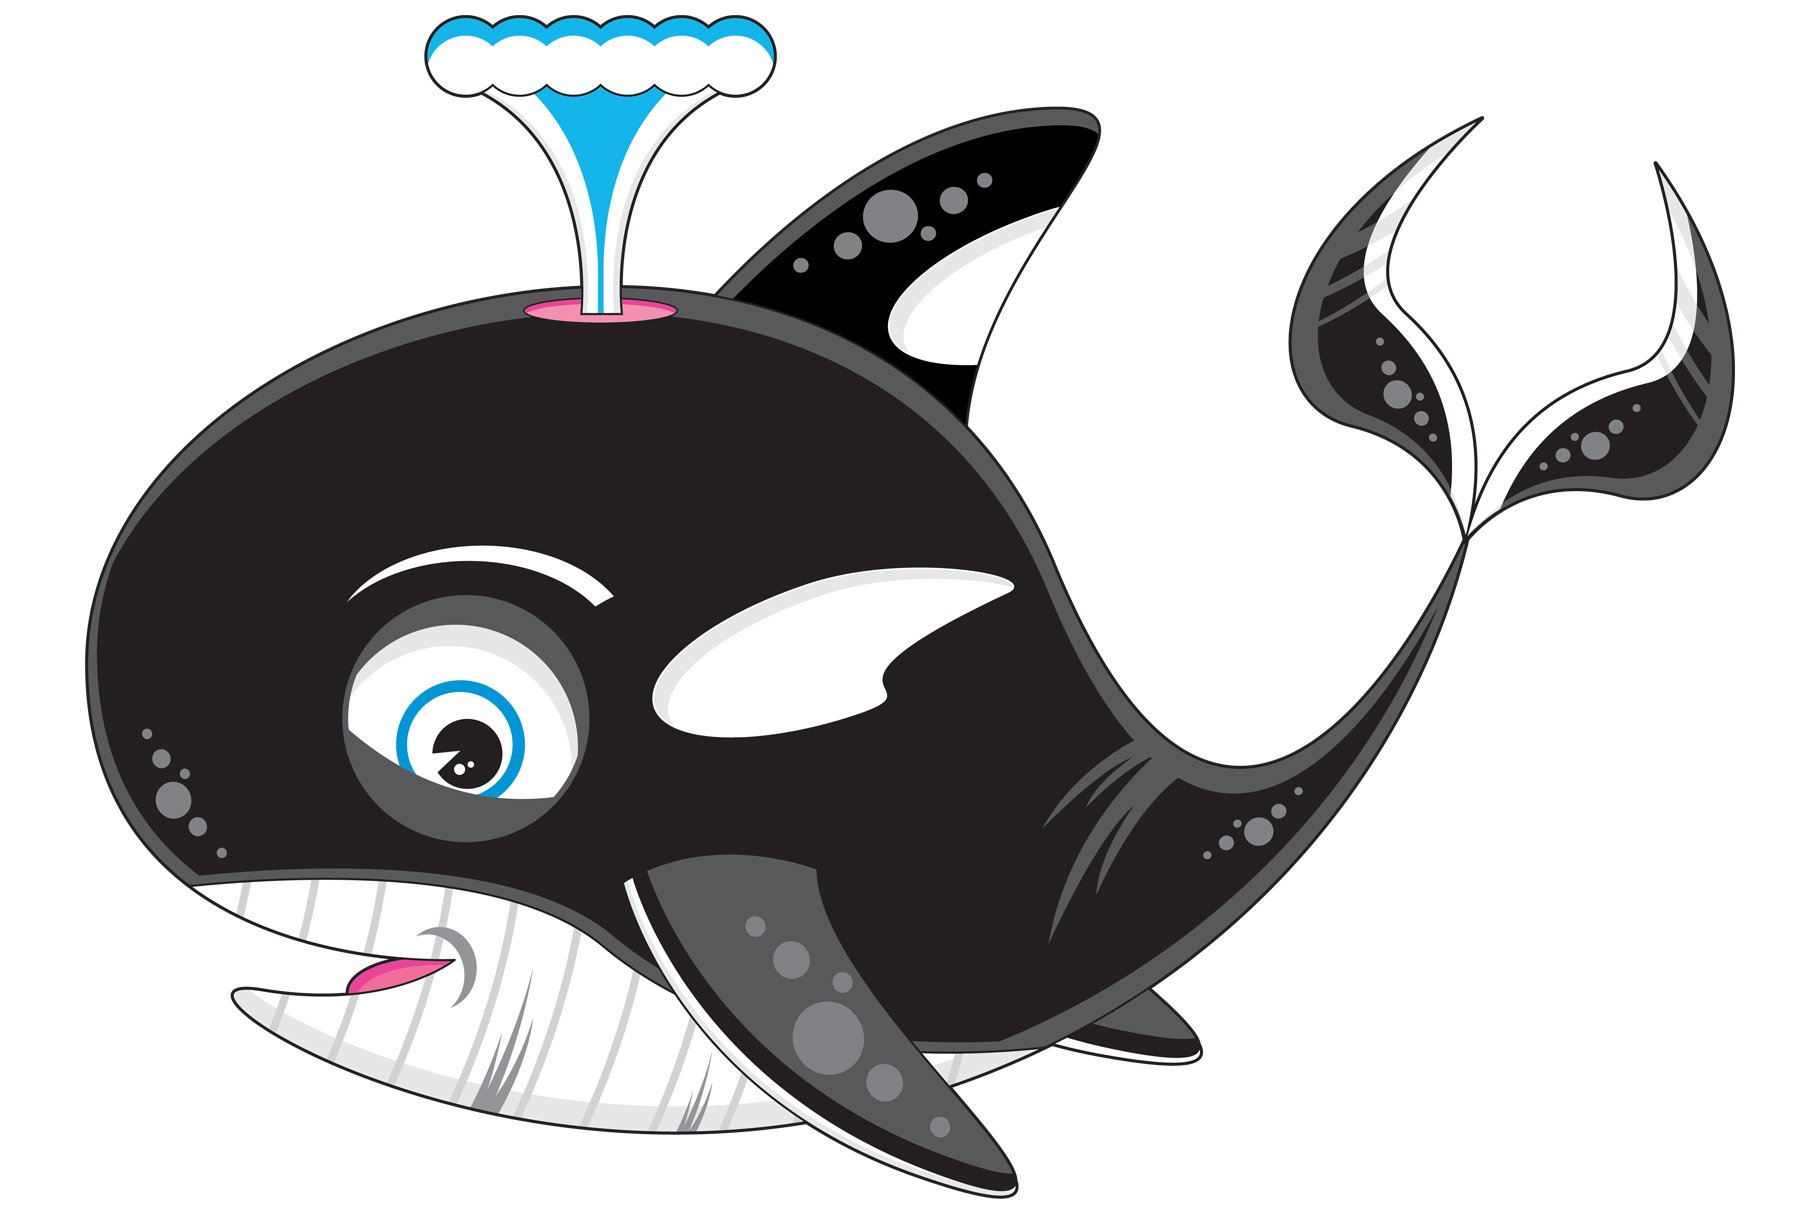 Cartoon Orca Whale cover image.